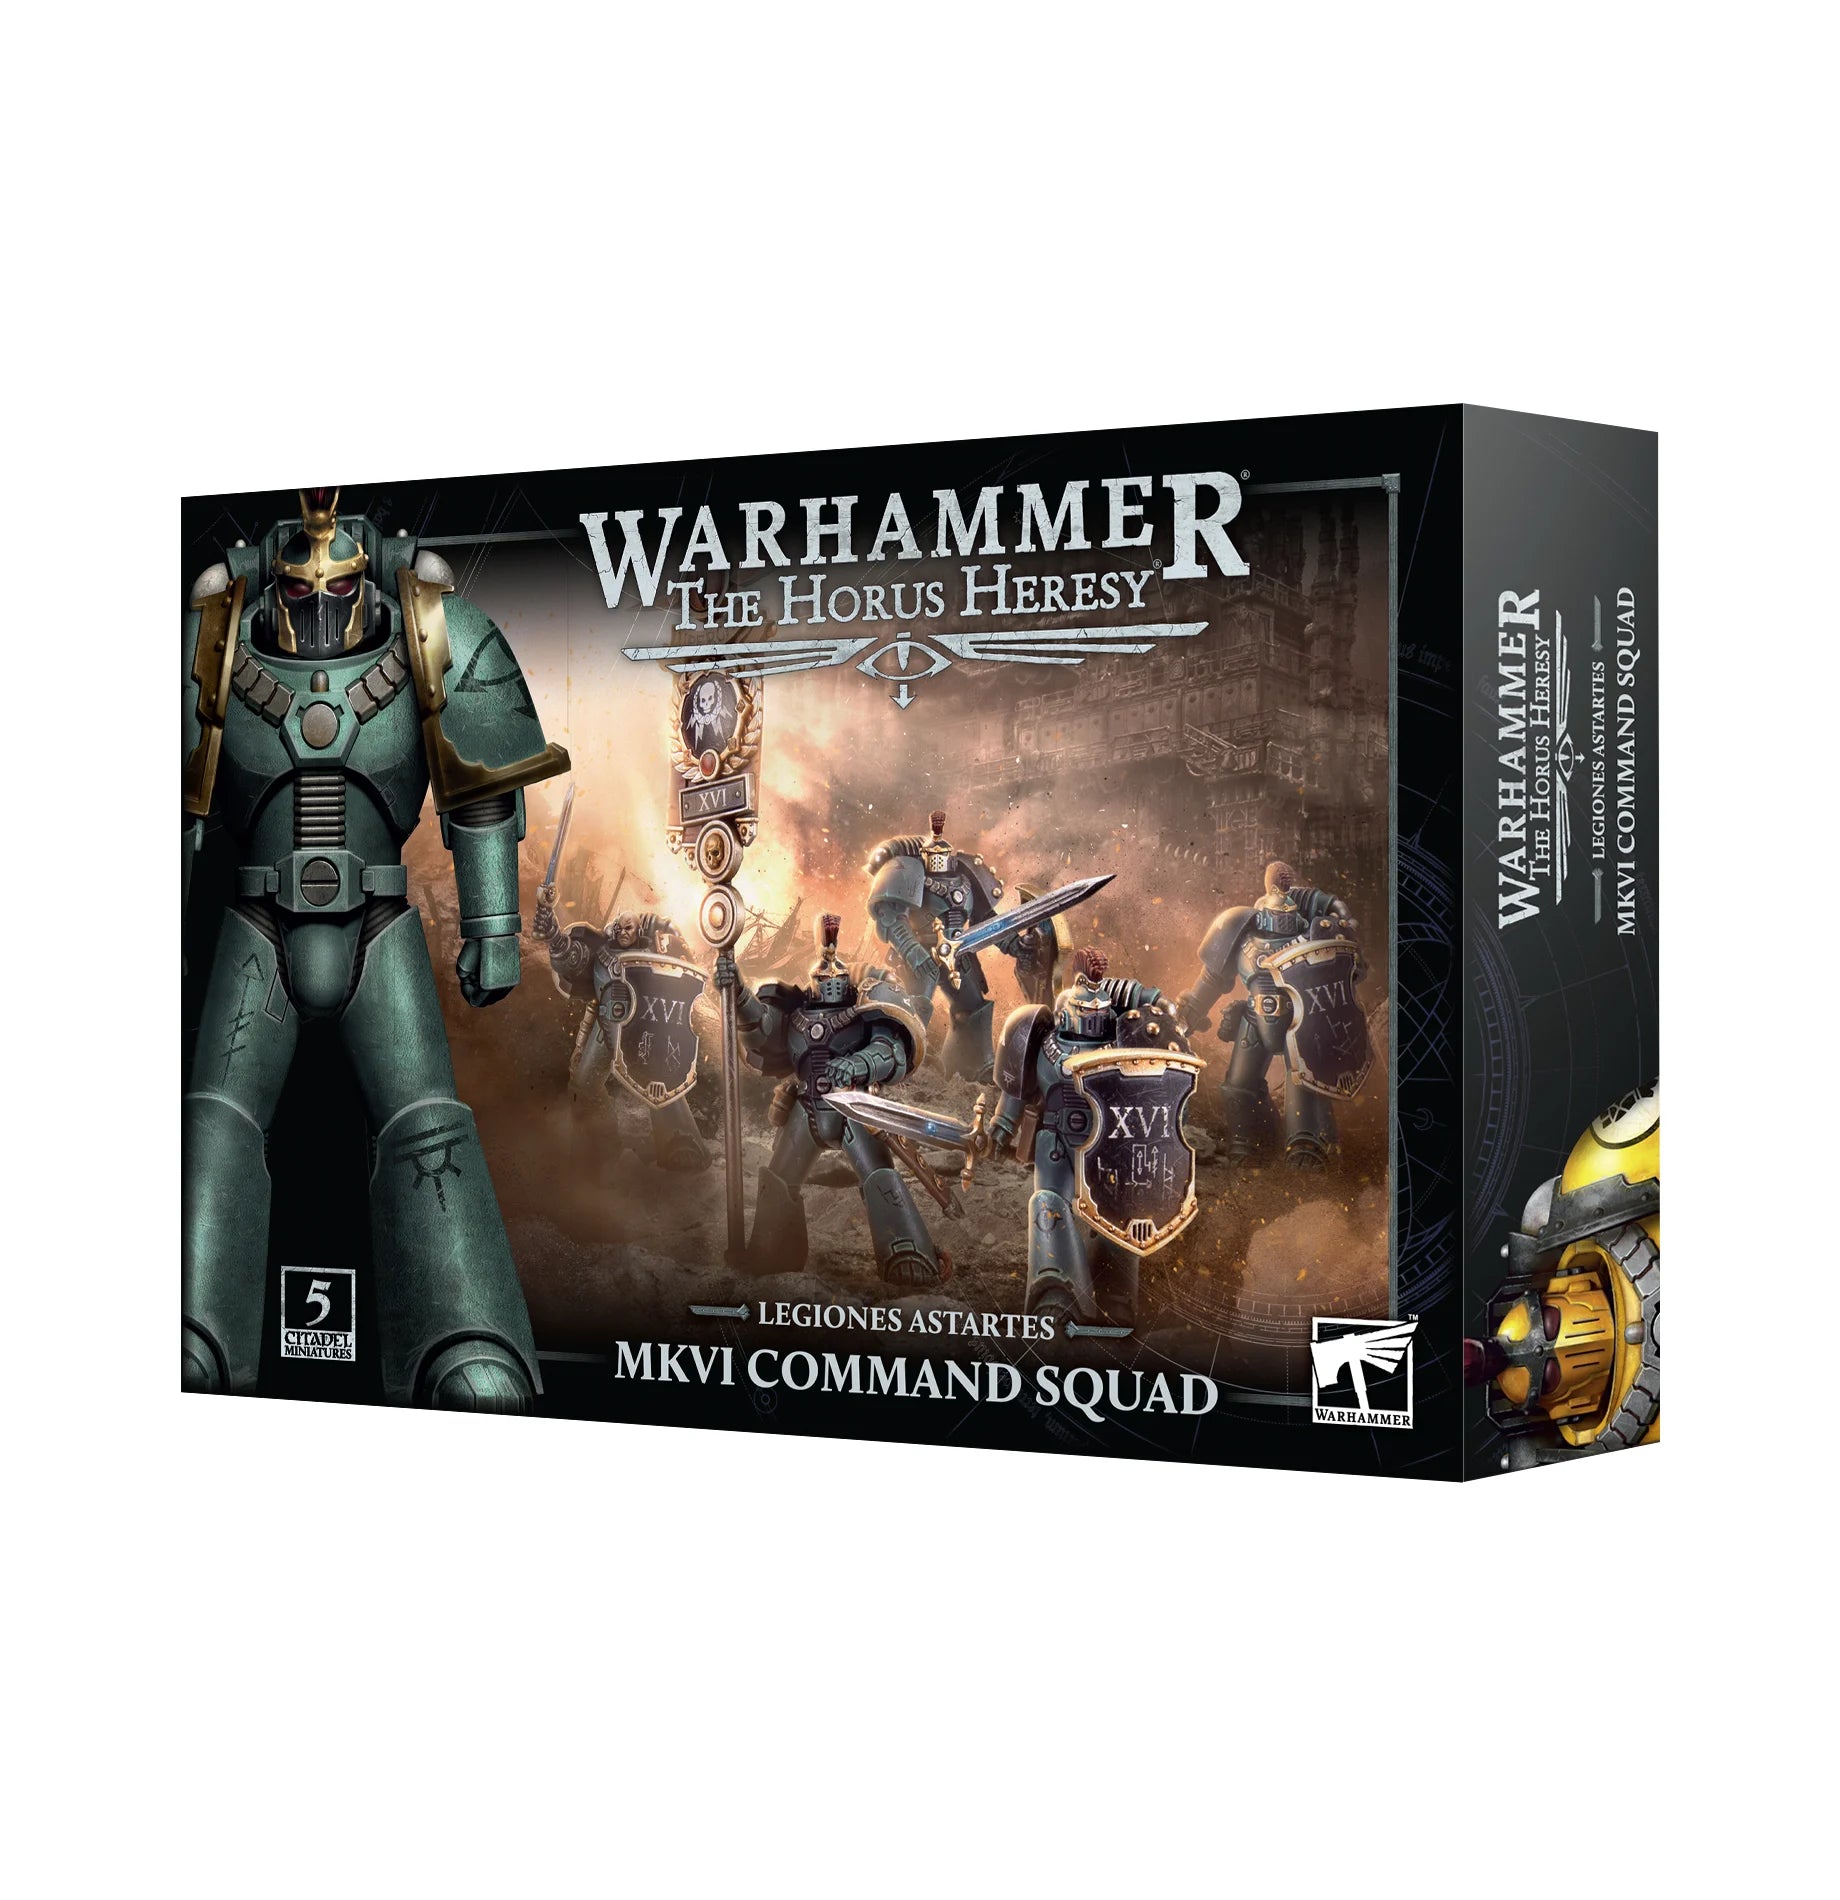 Warhammer Horus Heresy: Legiones Astartes MKVI Command Squad